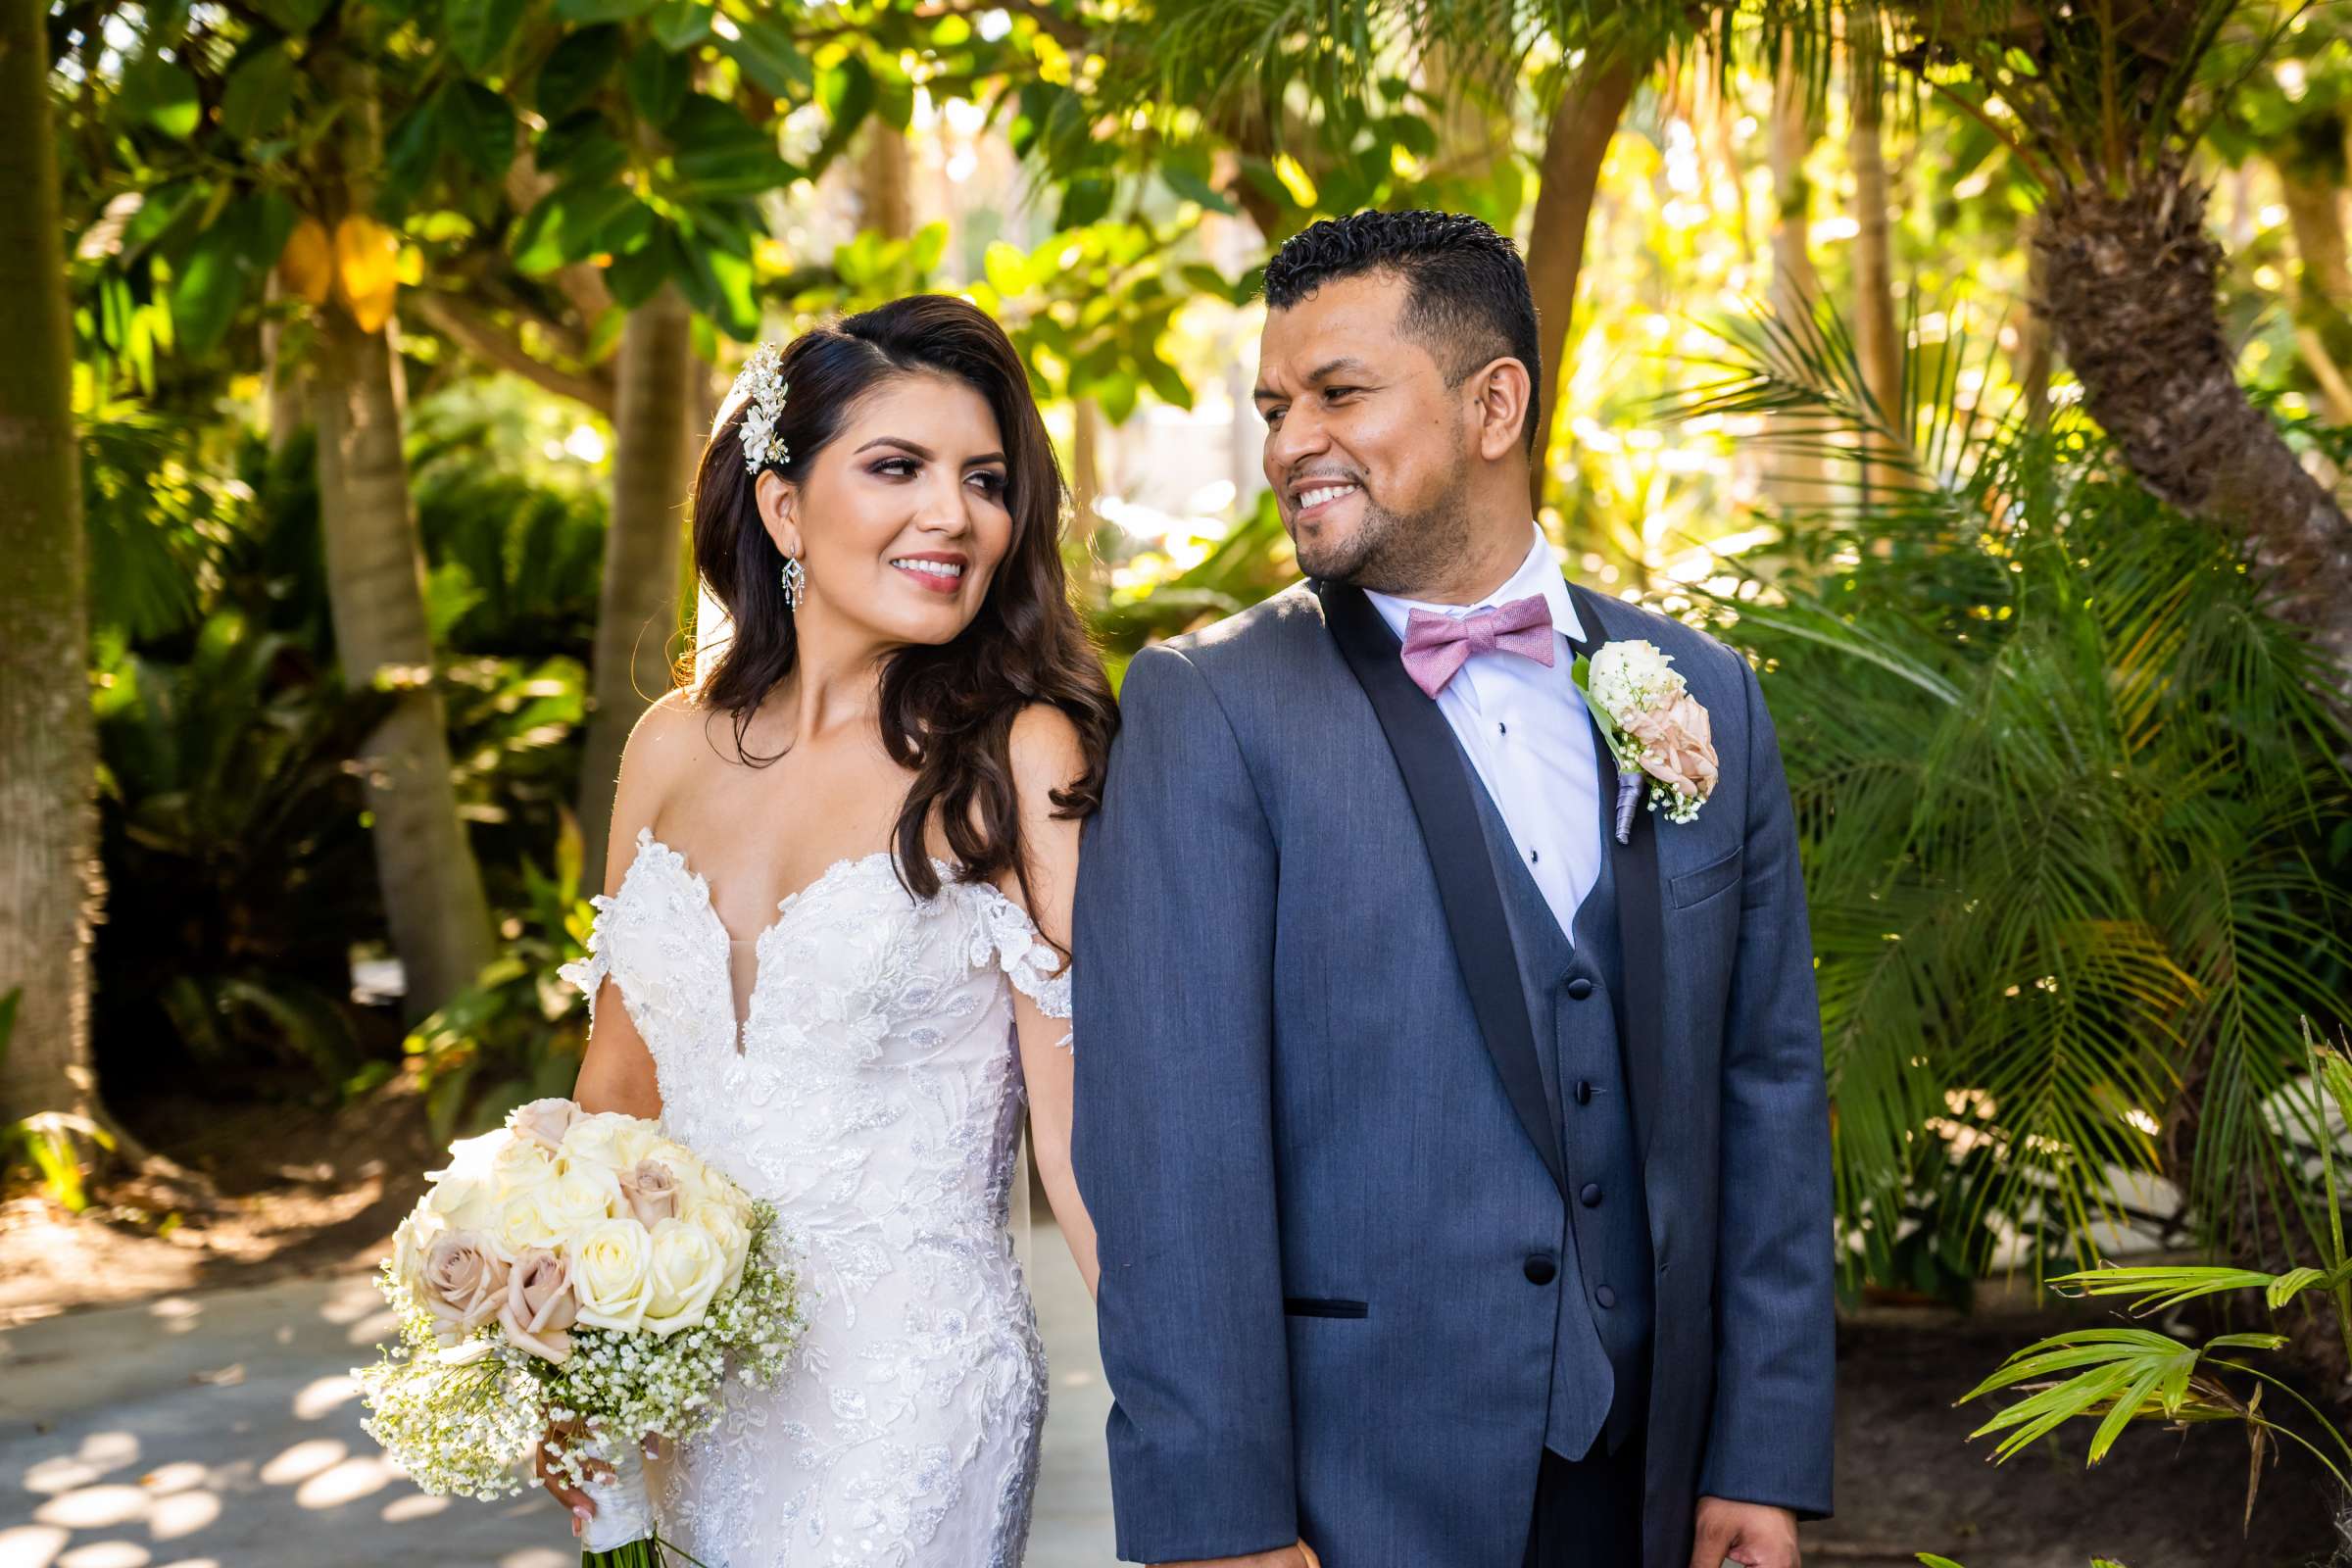 Paradise Point Wedding, Sinthia and Jose Wedding Photo #83 by True Photography